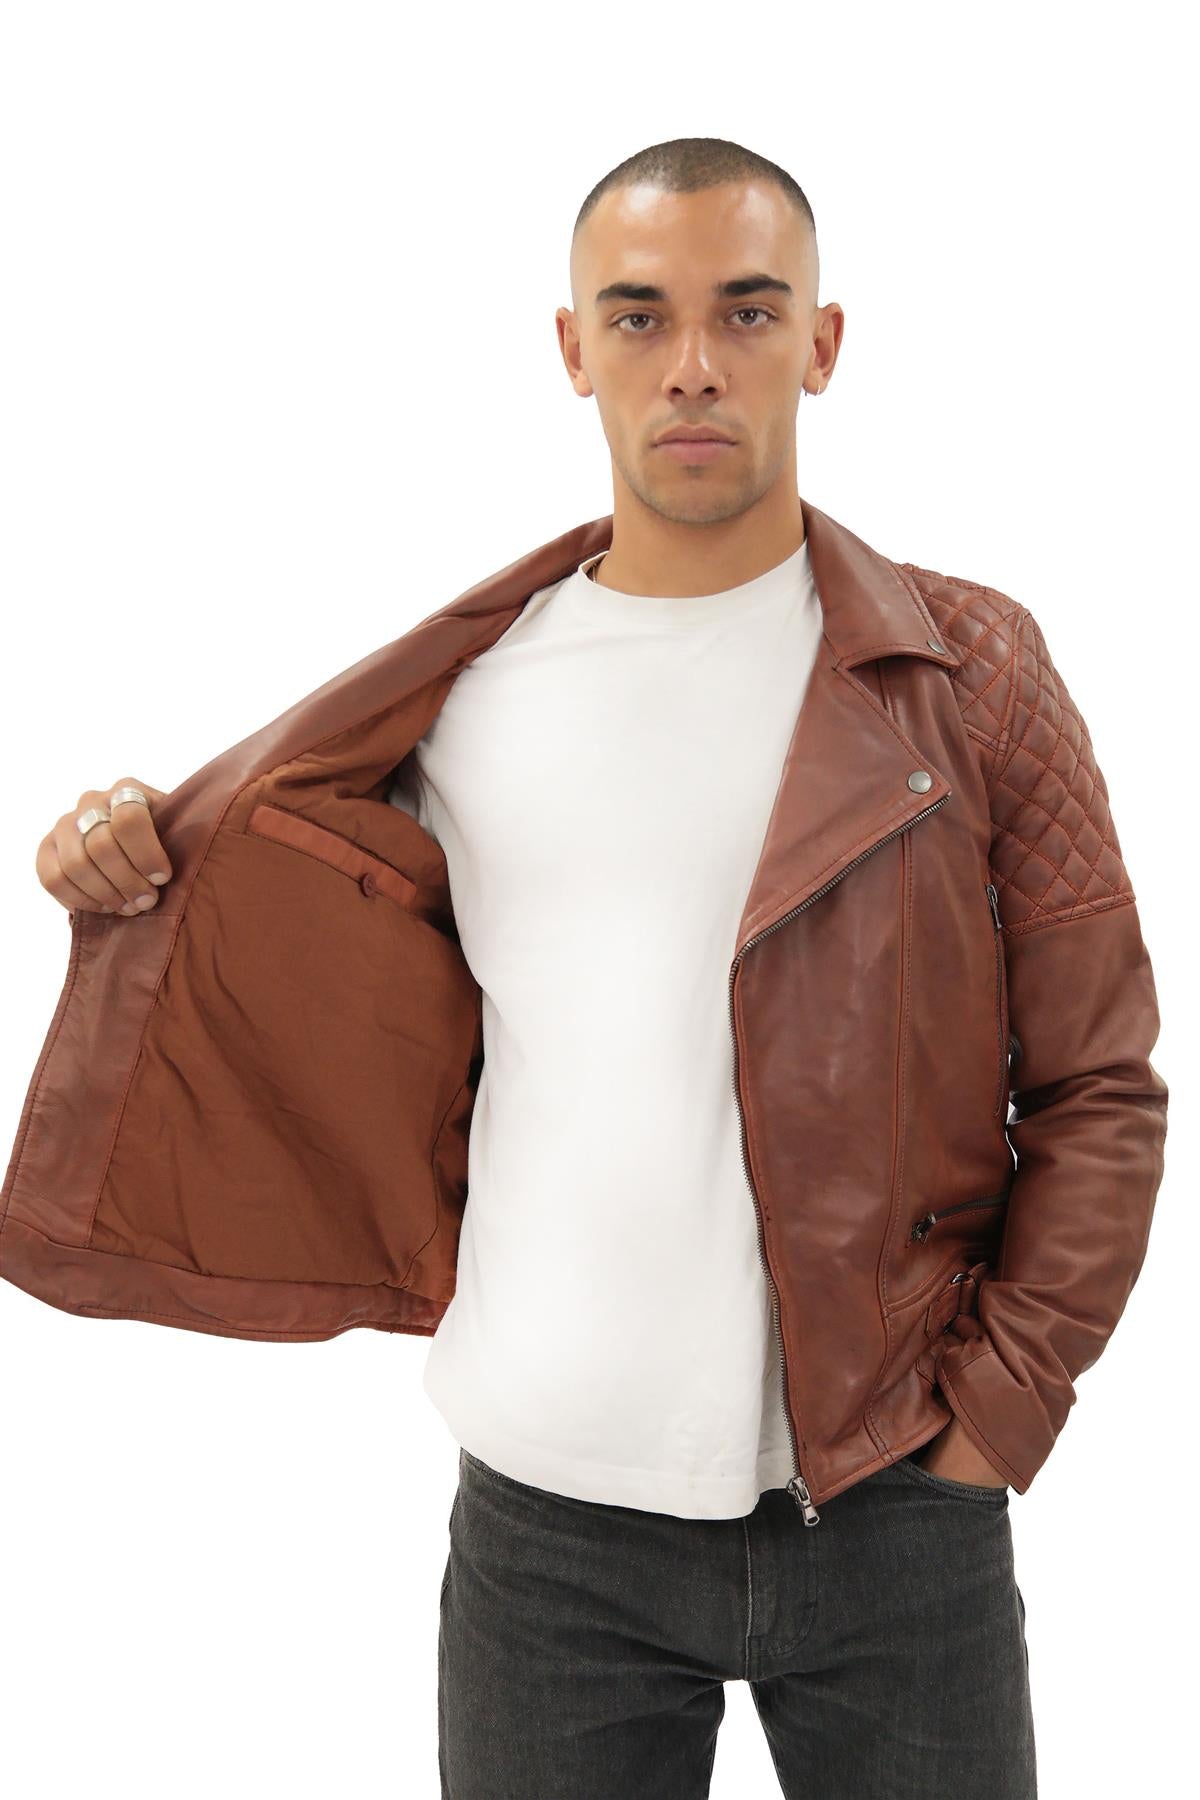 Mens Quilted Leather Biker Jacket-Bordeaux